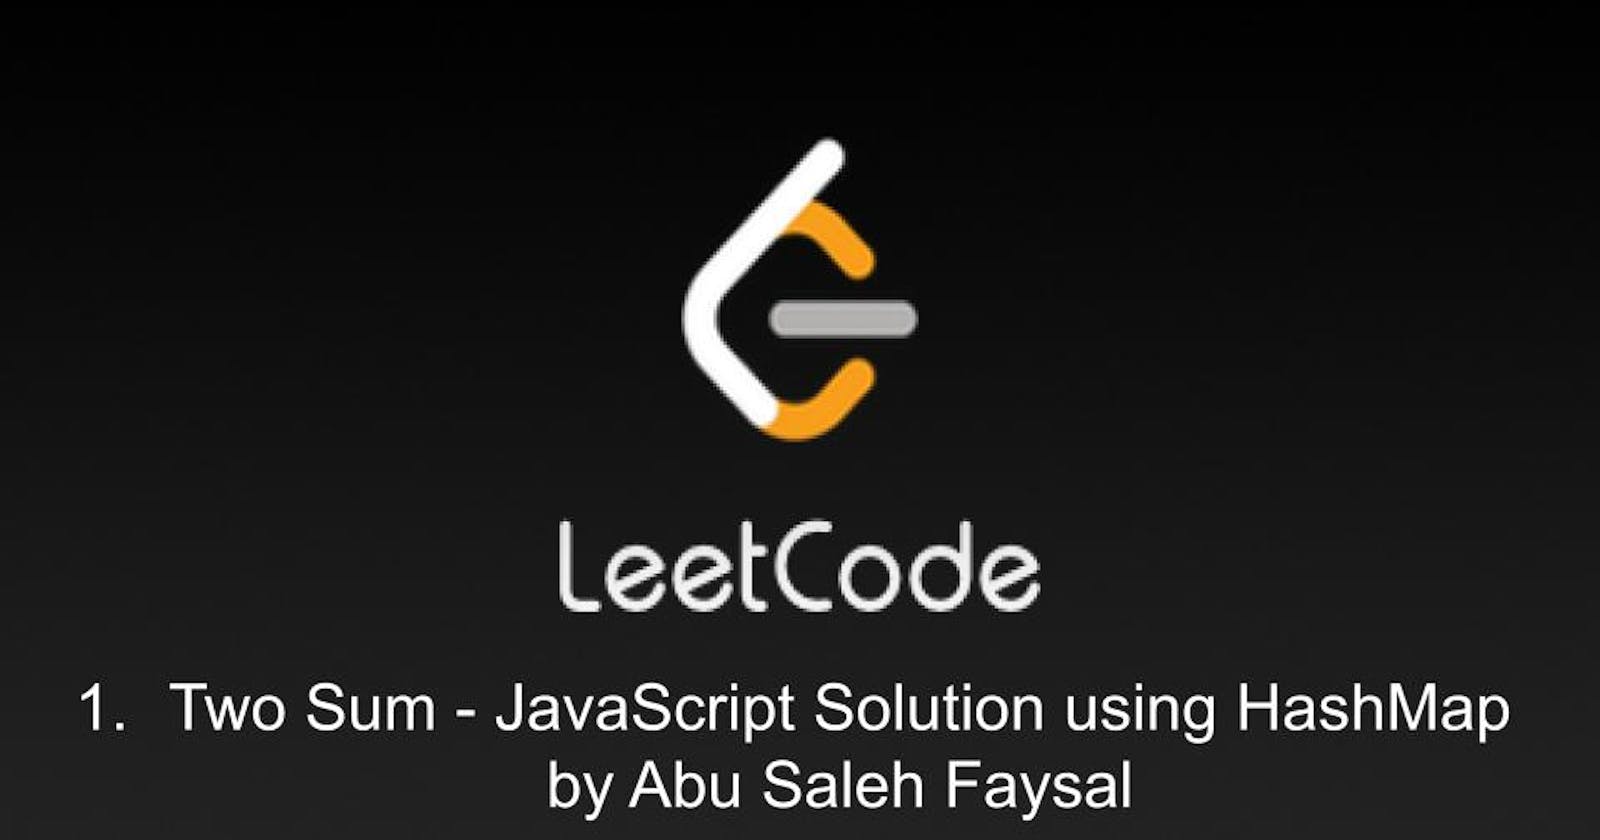 1. Two Sum - Leetcode - JavaScript Solution using HashMap - by Abu Saleh Faysal